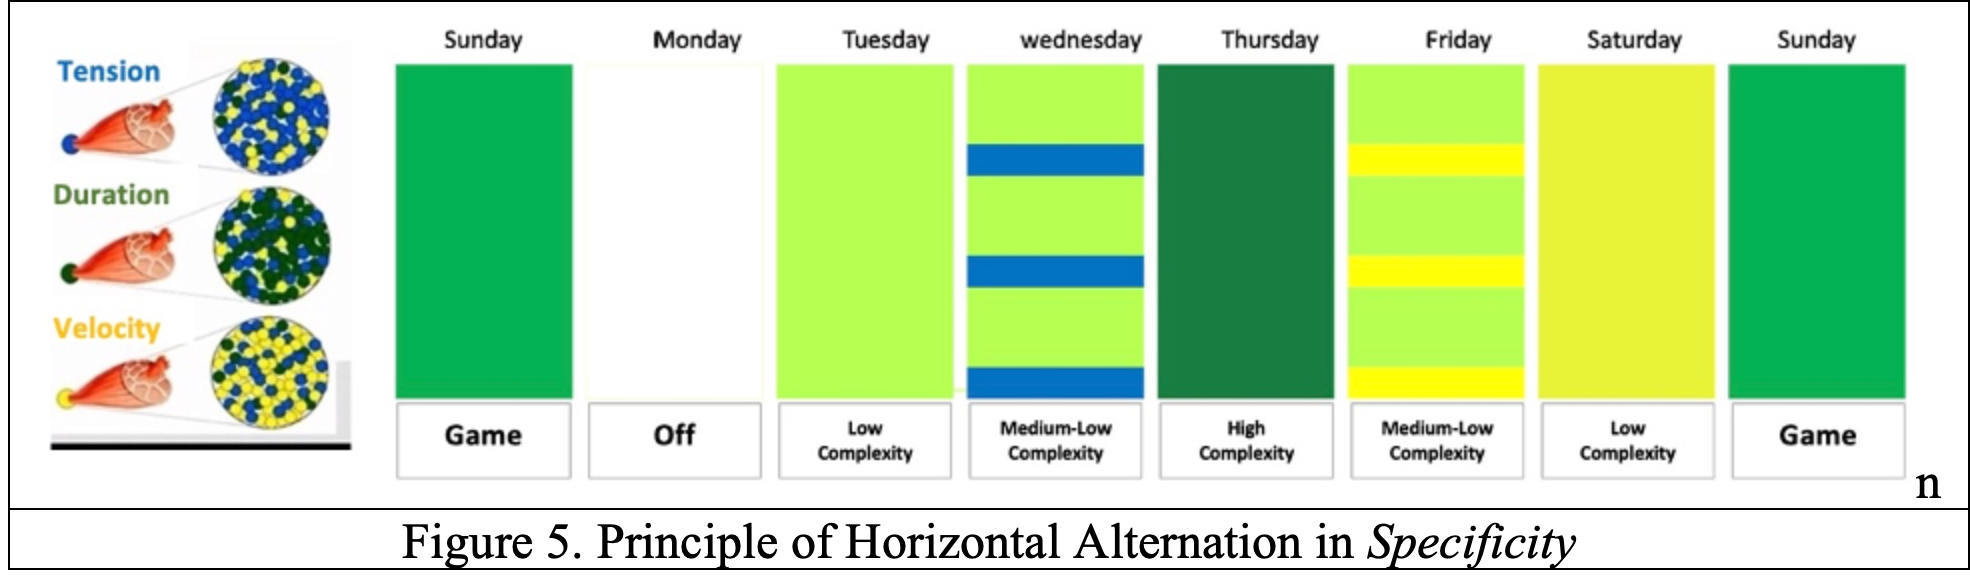 Principle of Horizontal Alternation in Specificity